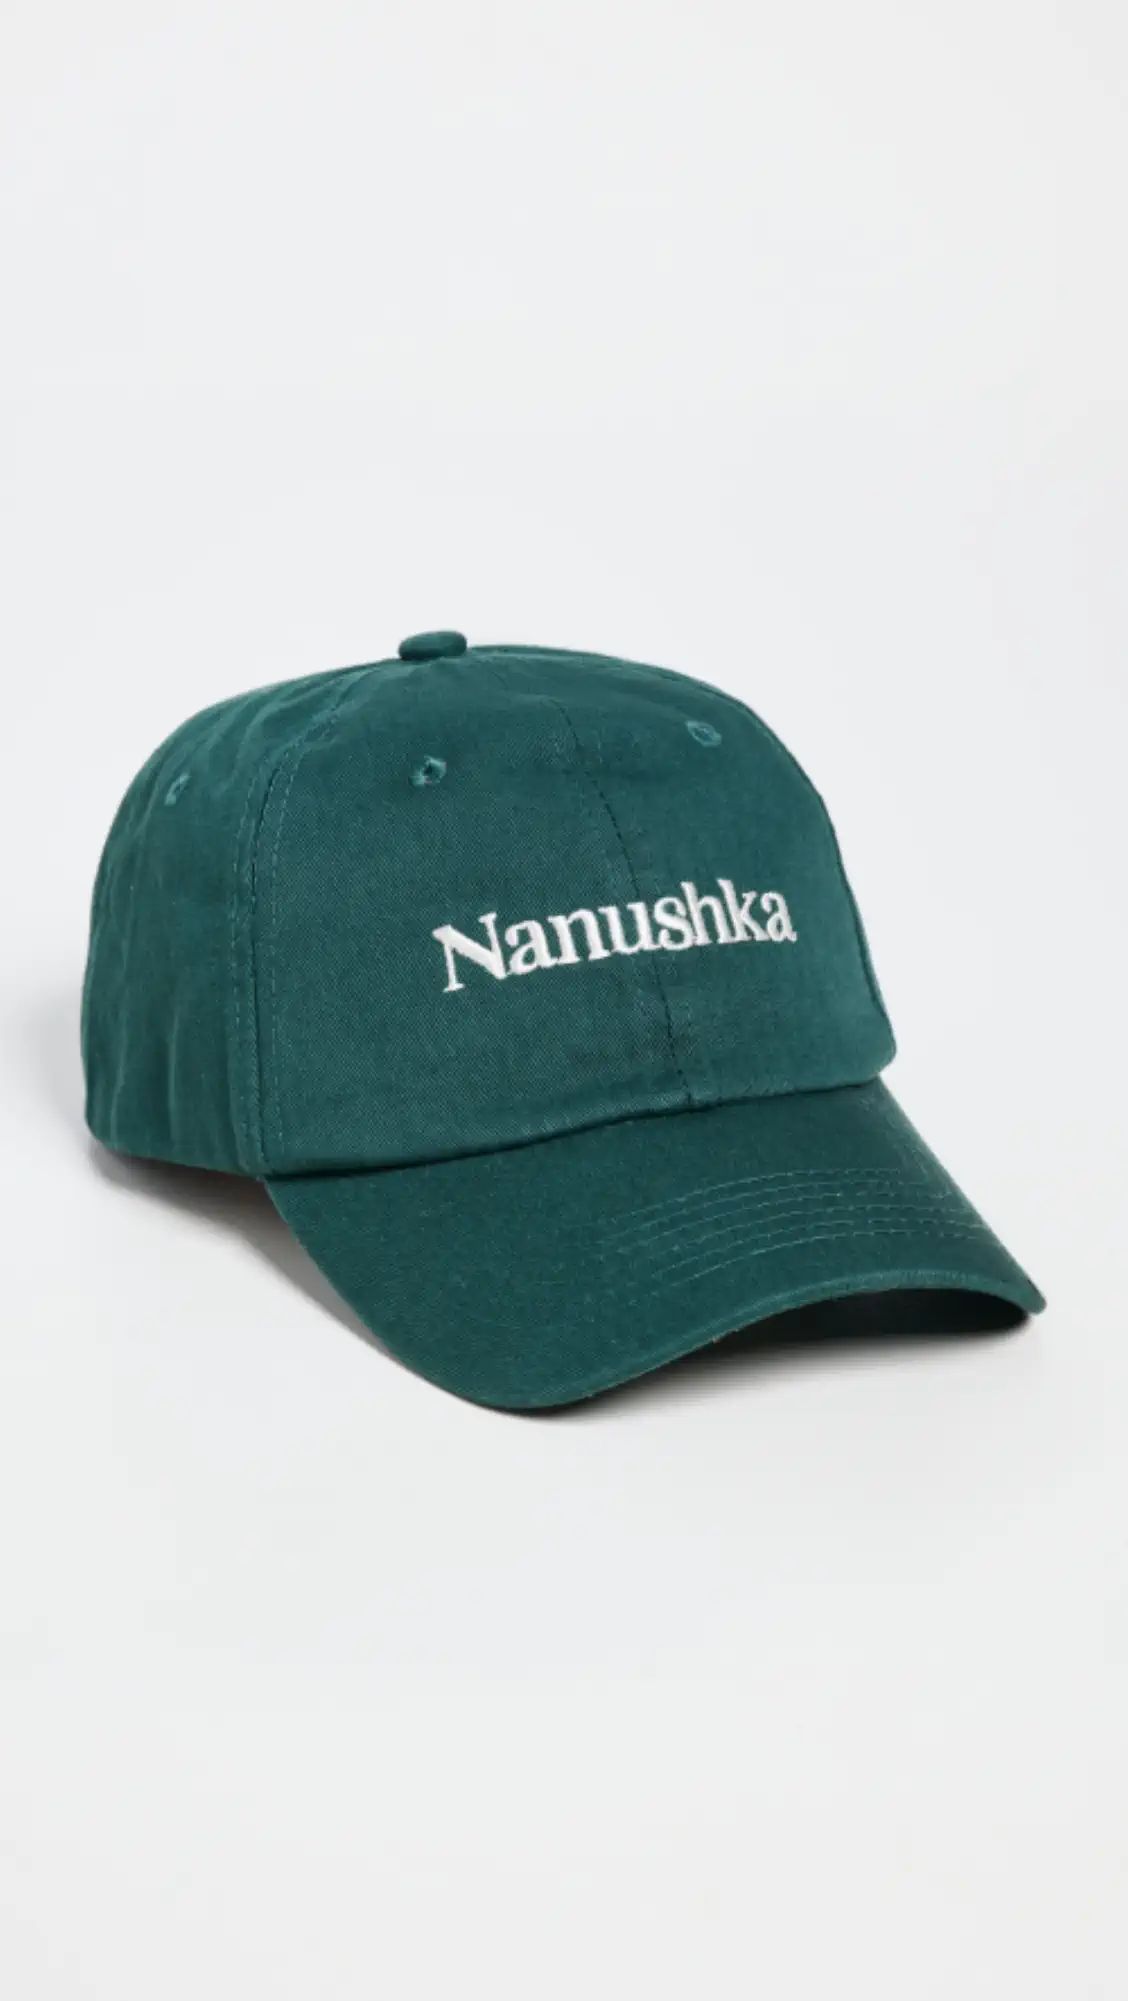 Nanushka | Shopbop